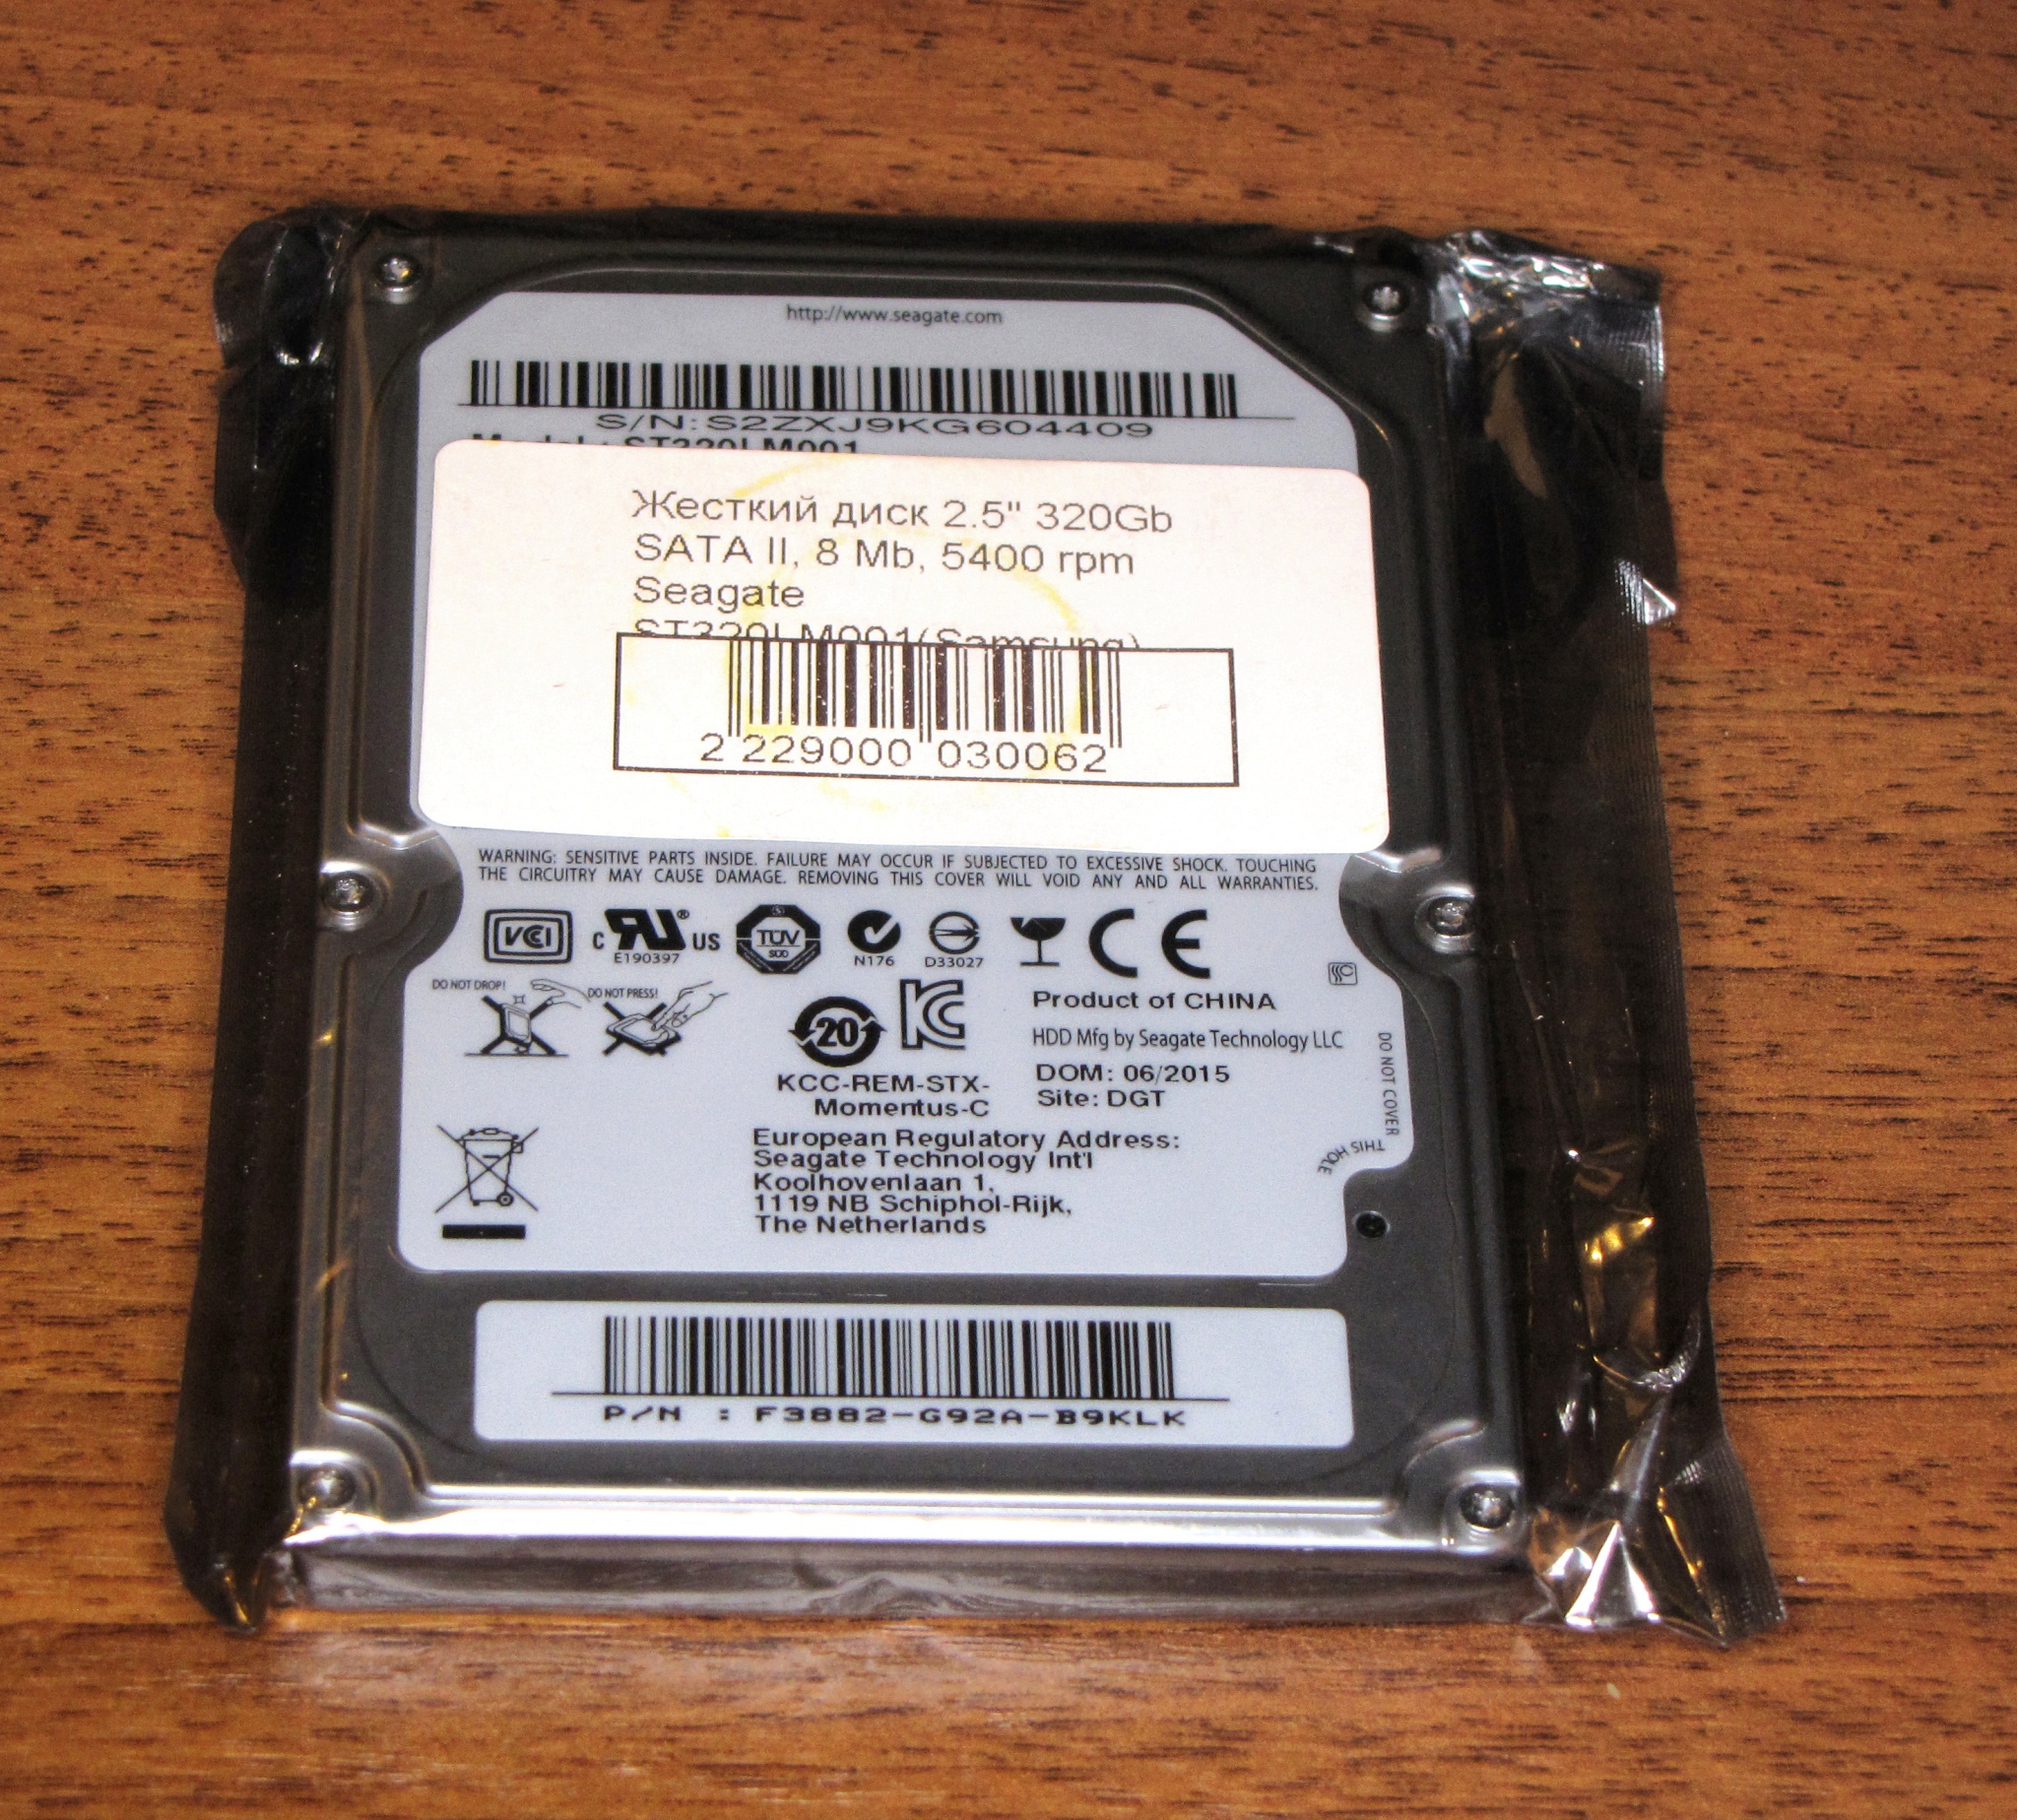 Дисковый накопитель st320lm001 HN-m320mbb (320 ГБ, 5400 RPM, SATA-II). St320lm001. Seagate 5xw182ry плата. Ж диск 320гб фото.